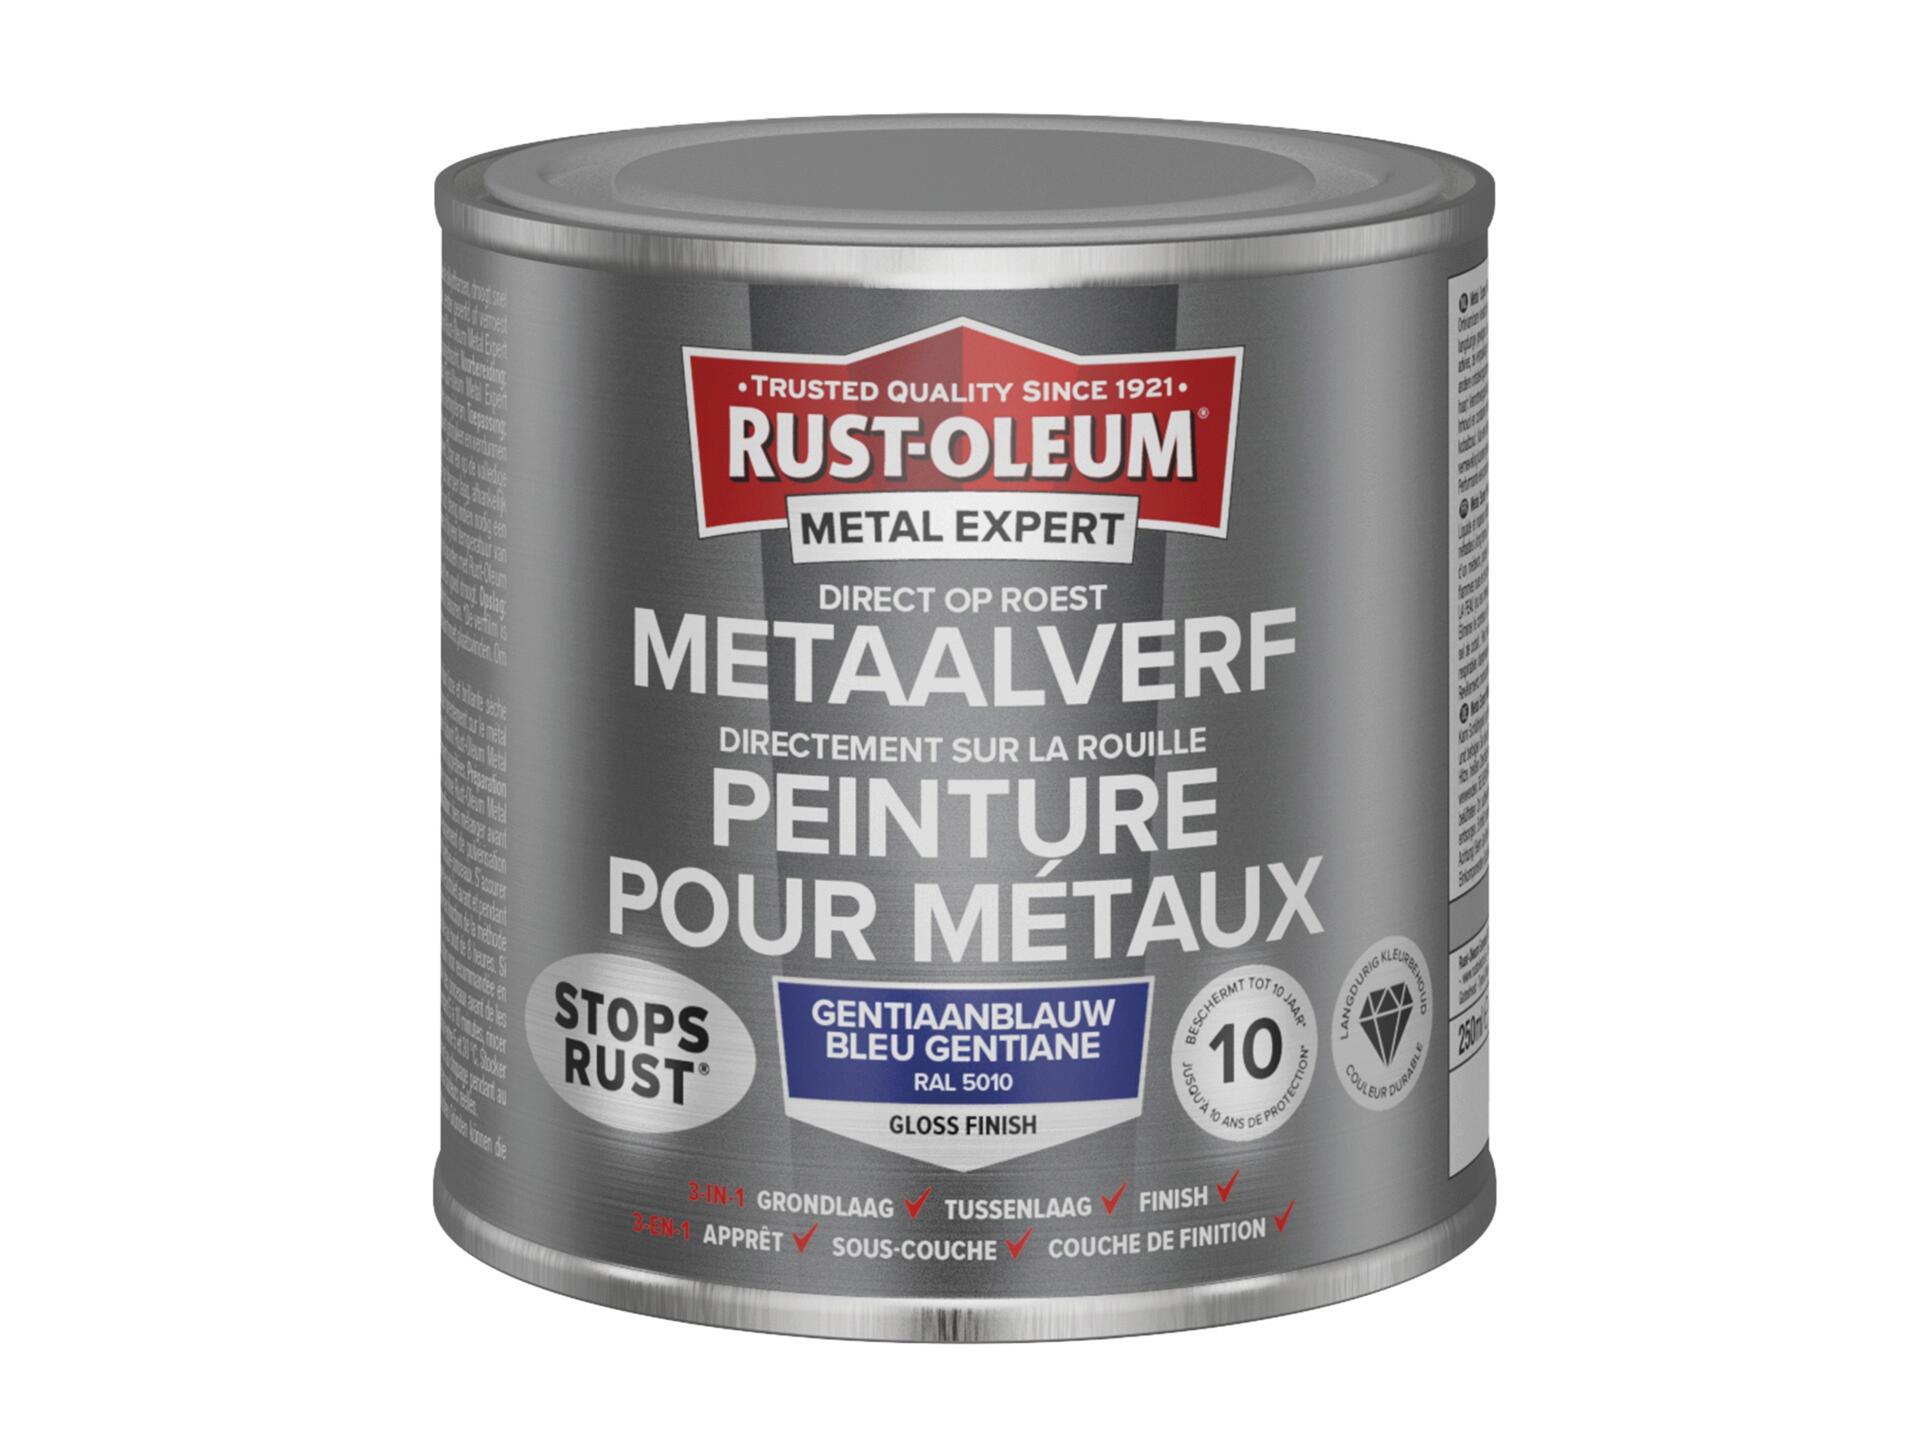 Rust-oleum Metal Expert peinture pour métaux brillant 250ml bleu gentiane